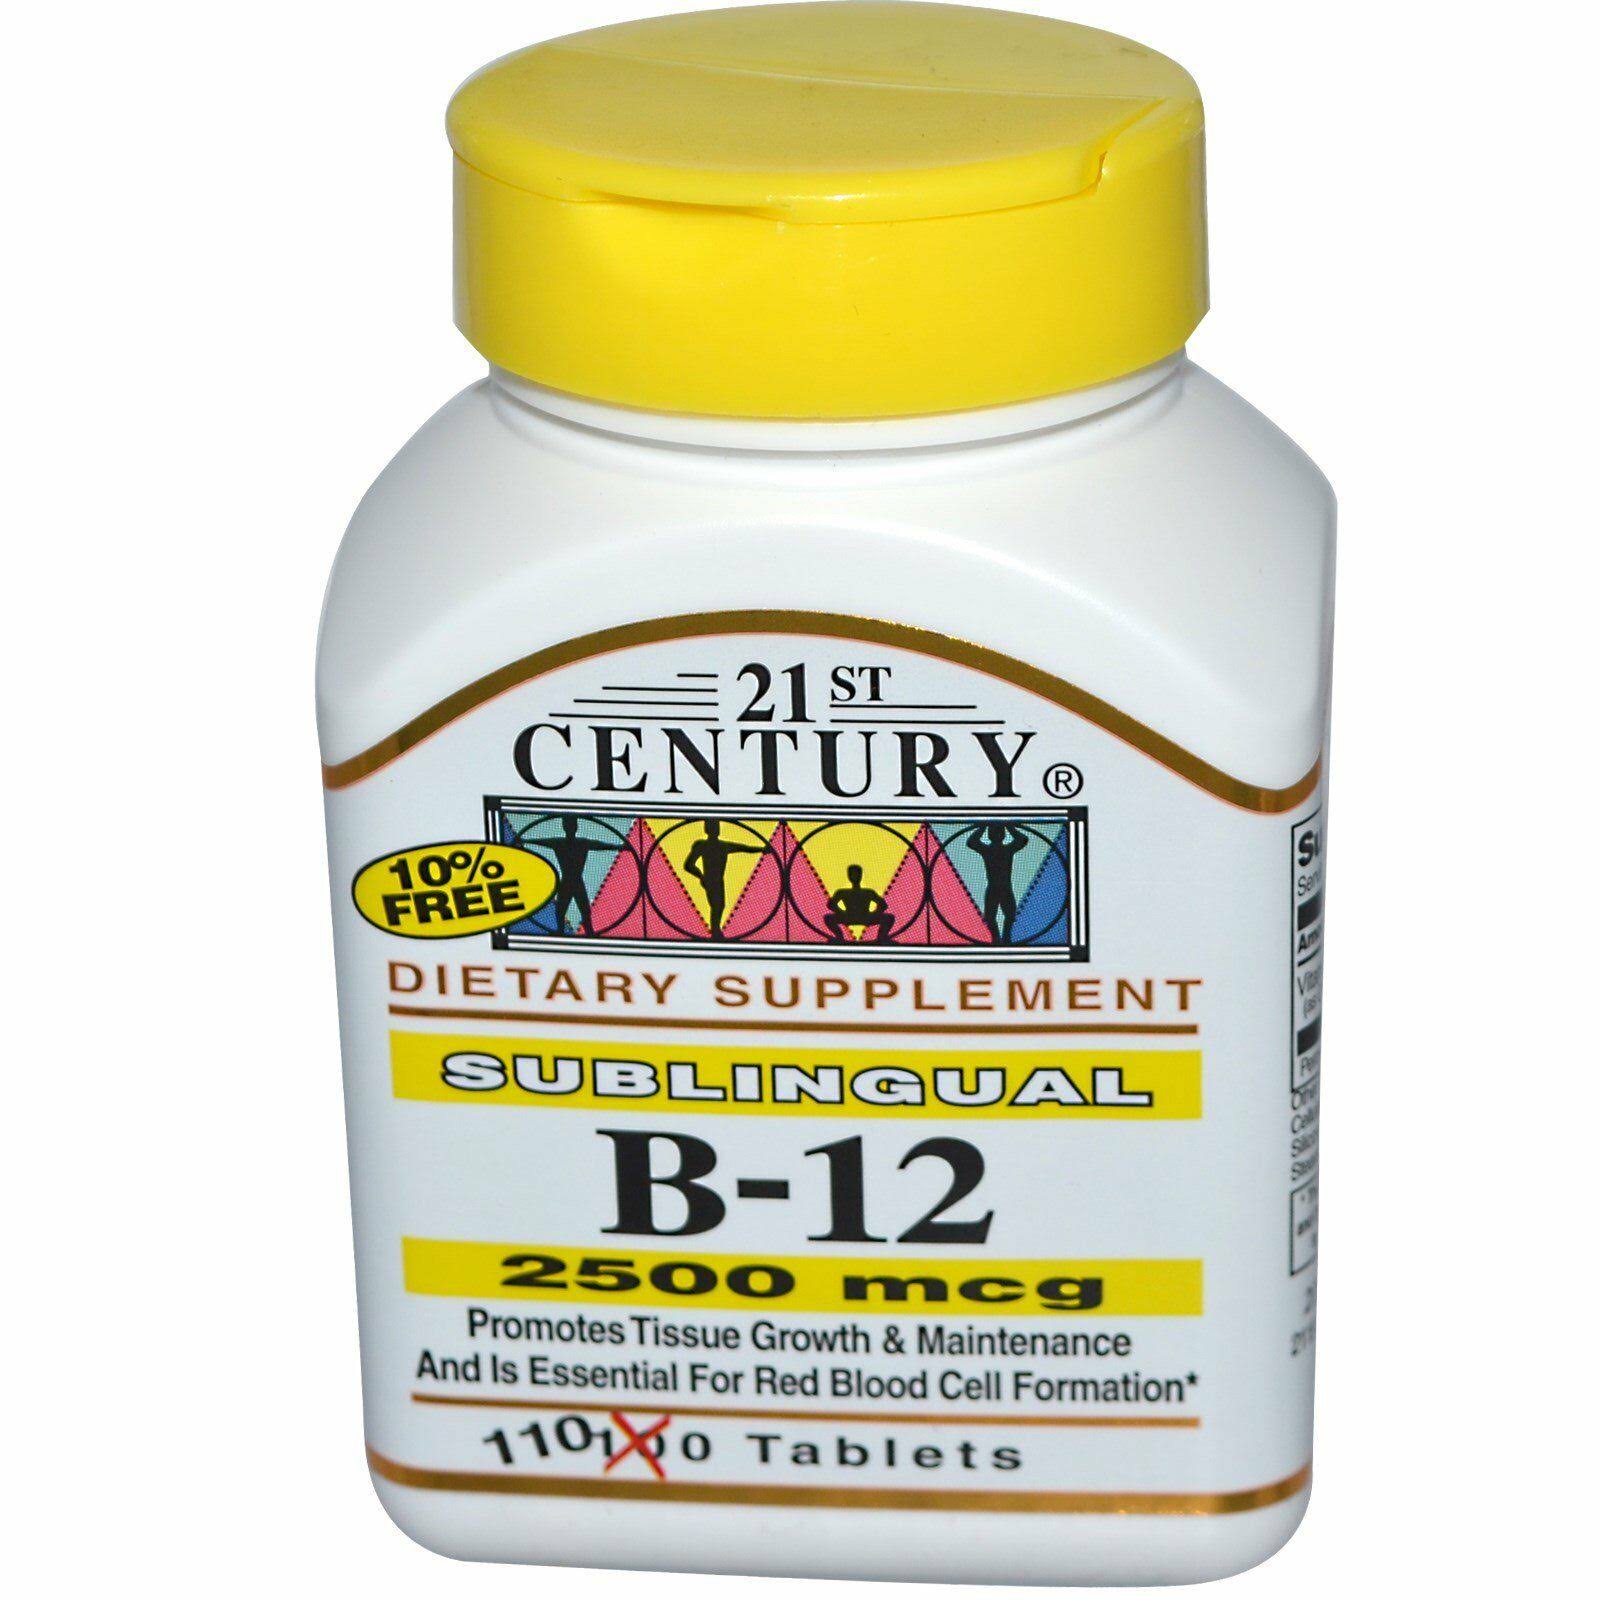 21st Century B 12 Sublingual Vitamin Supplement - 110 Tablets